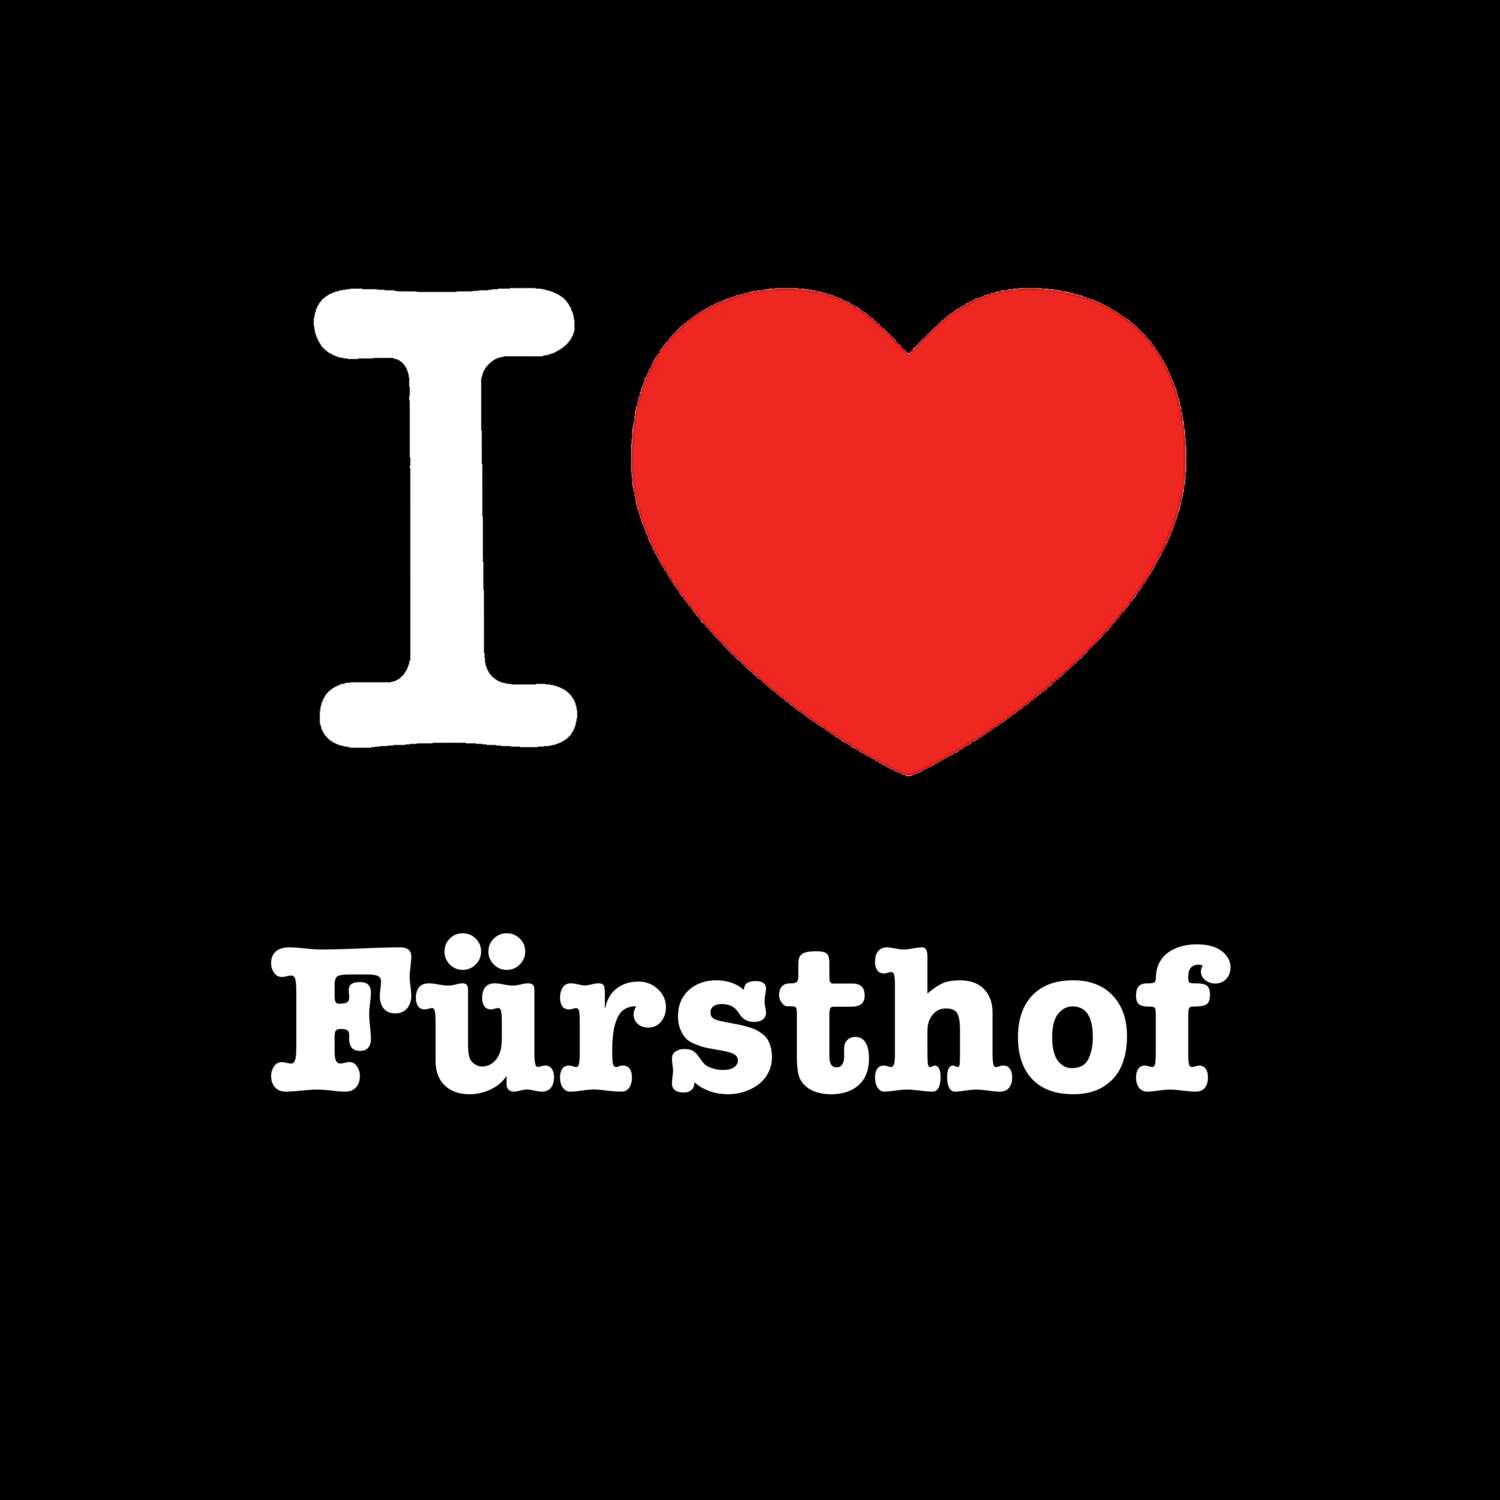 Fürsthof T-Shirt »I love«